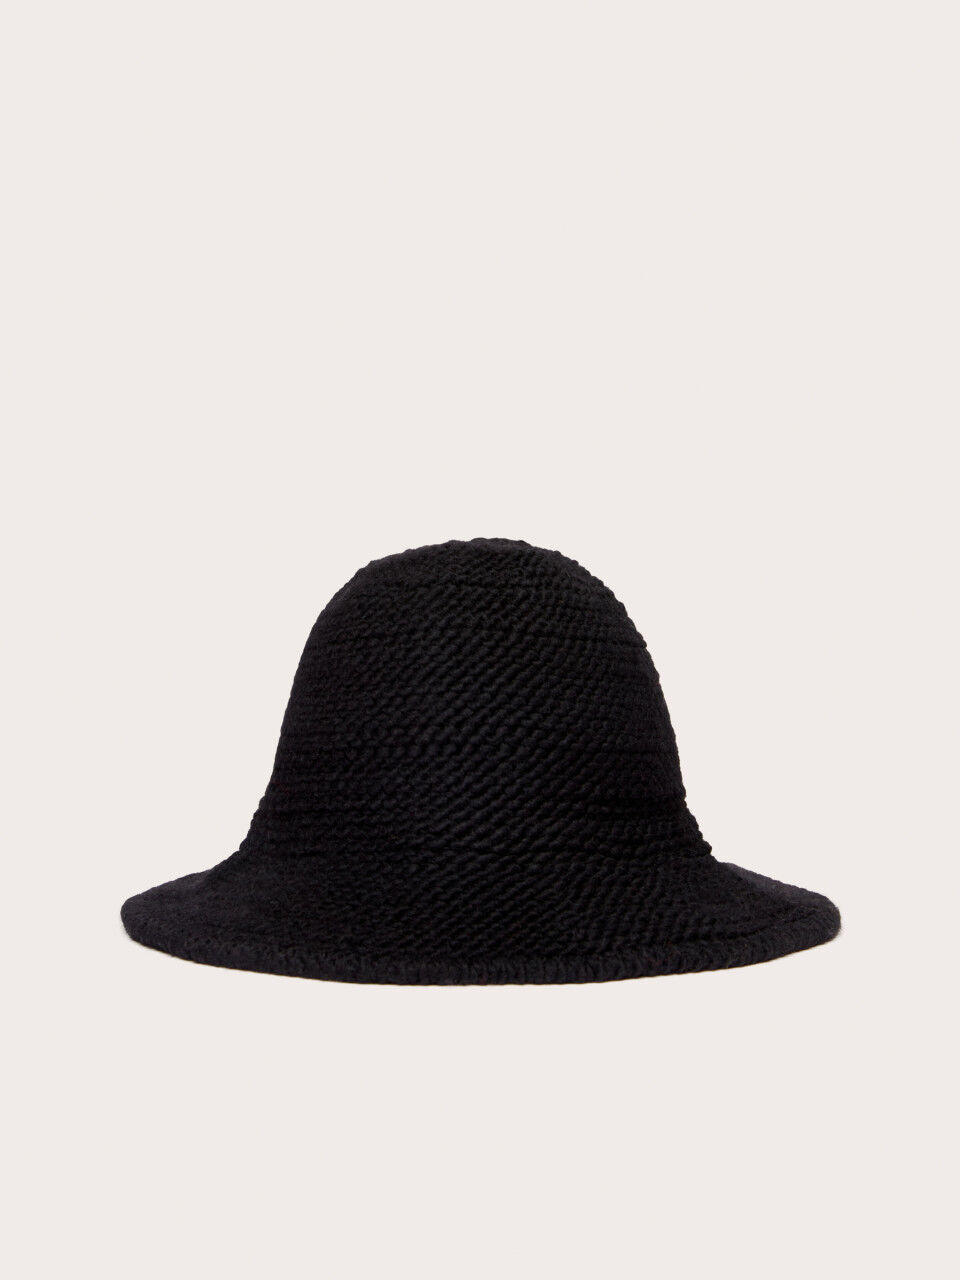 Knit fisherman's hat